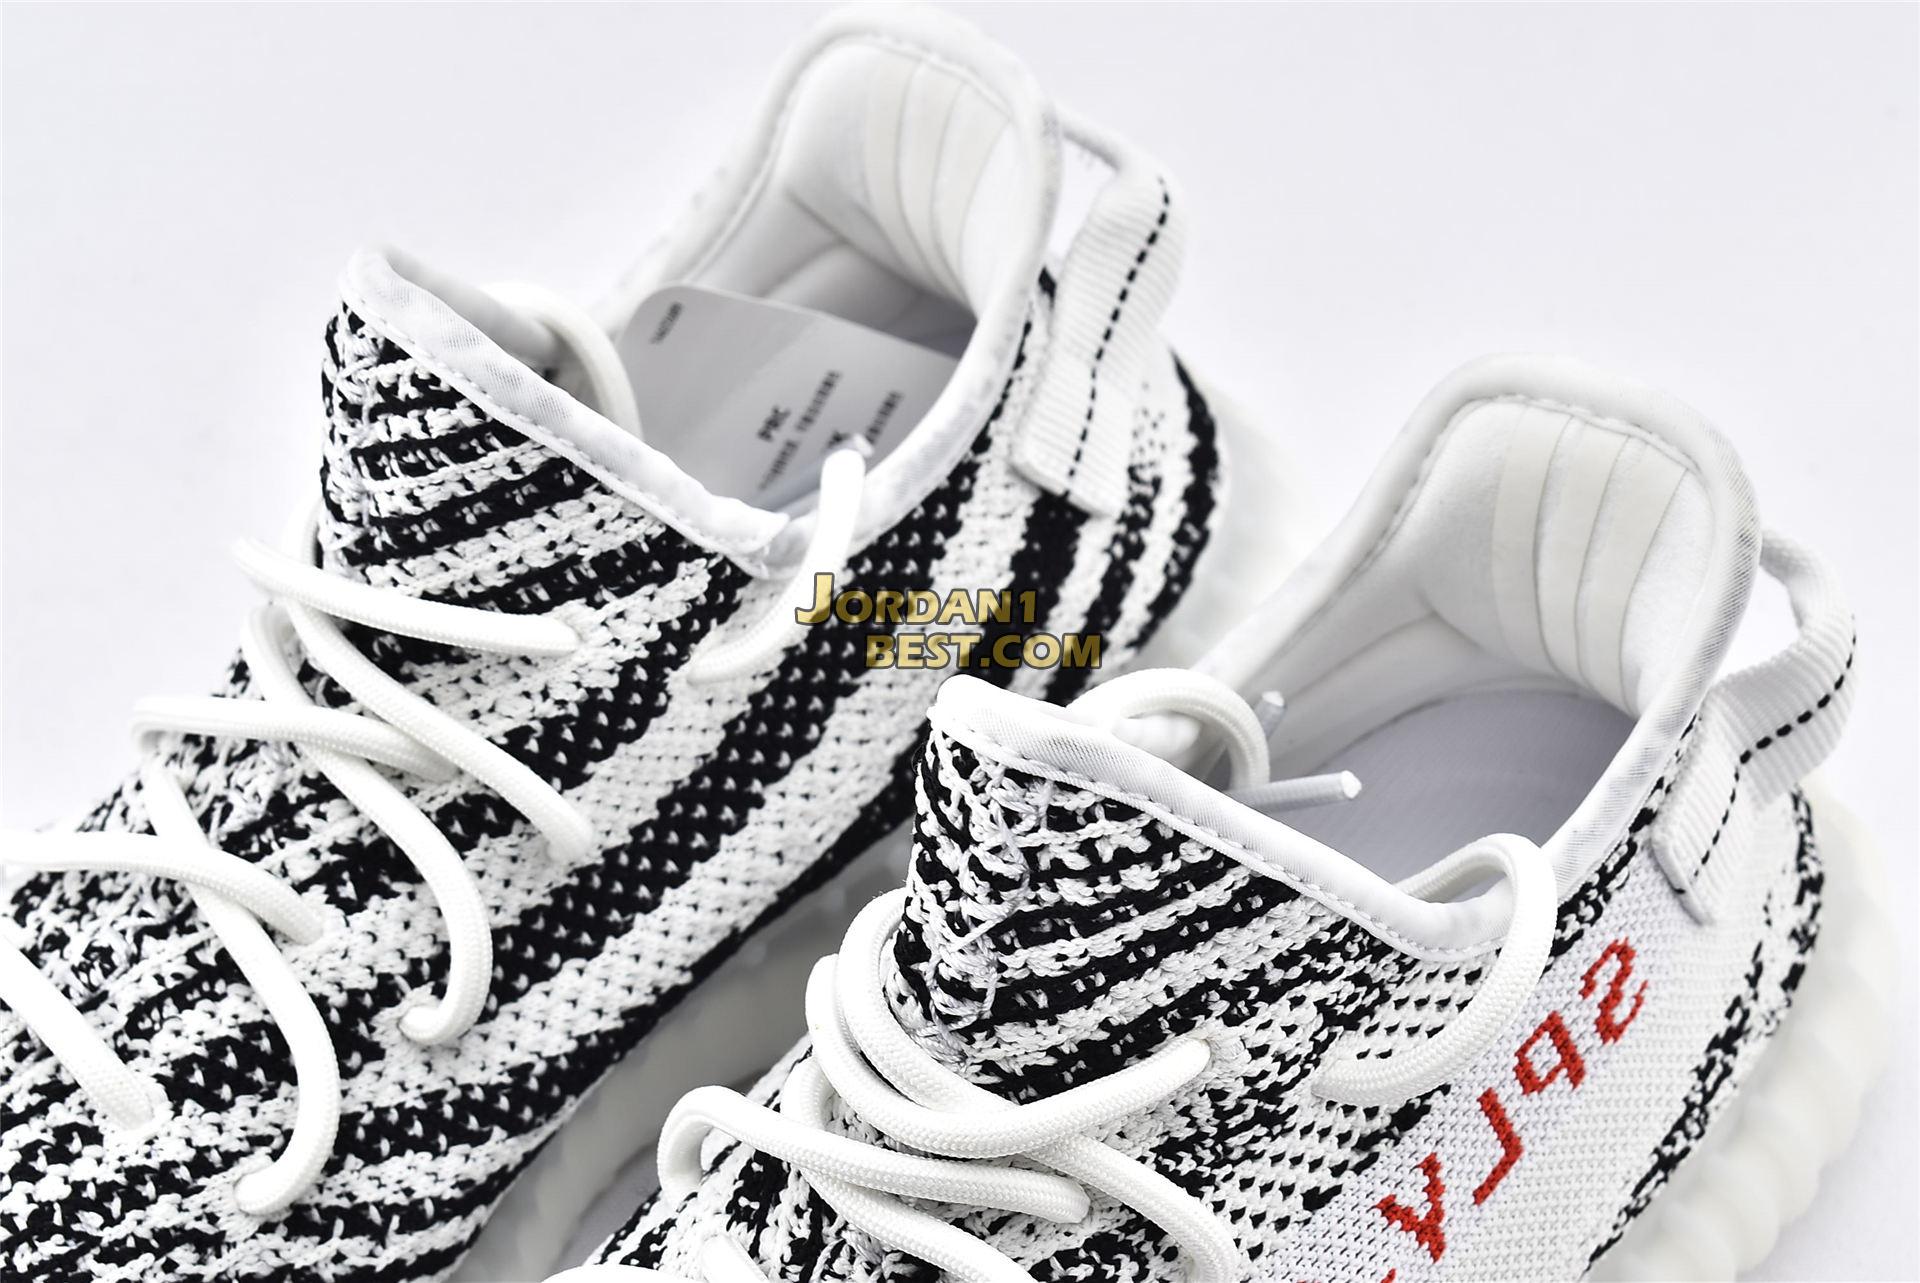 Adidas Yeezy Boost 350 V2 "Zebra" CP9654